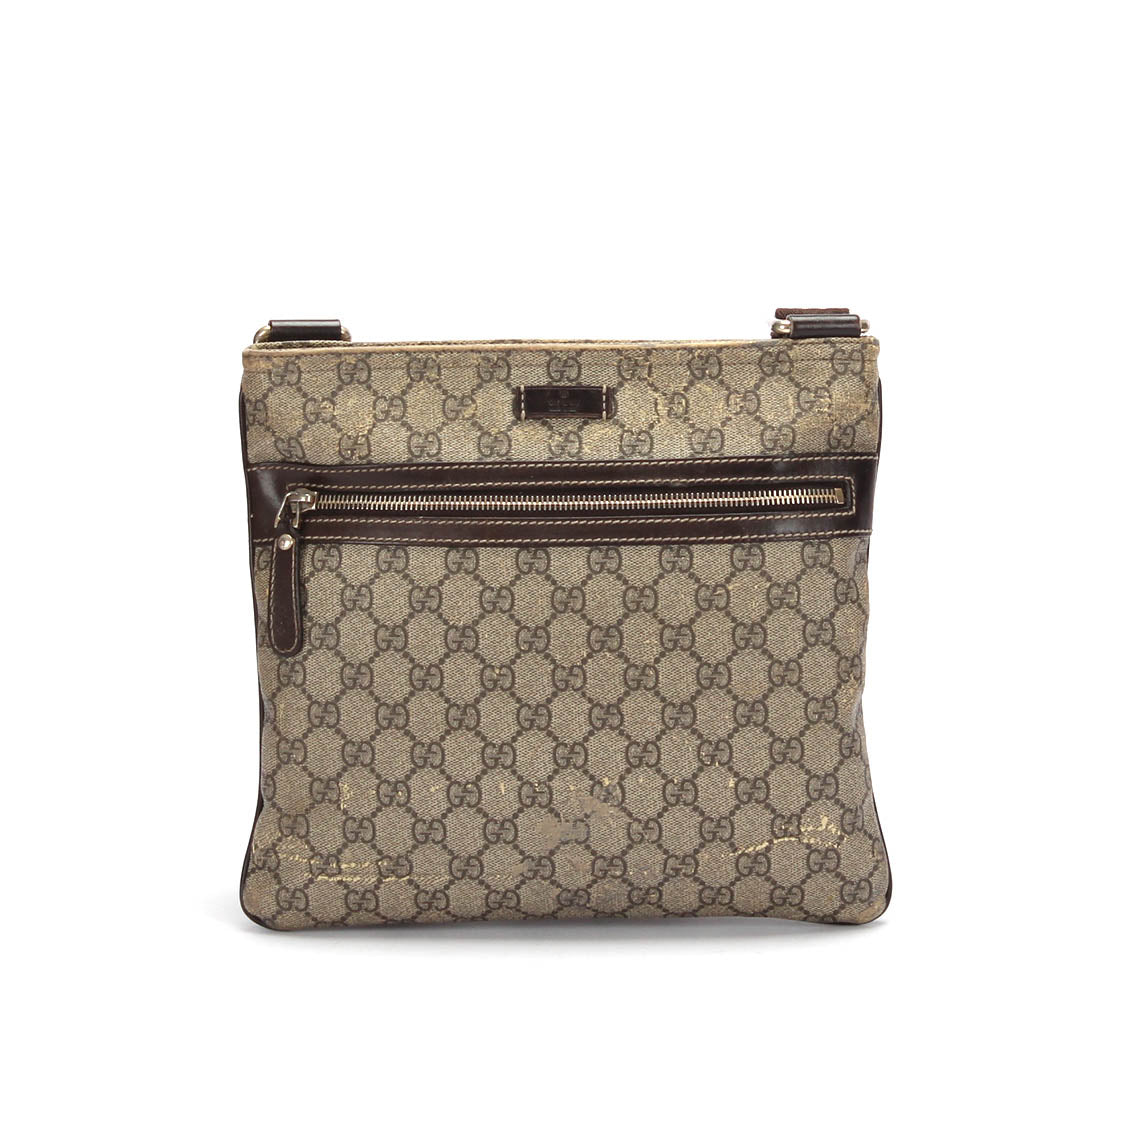 Gucci GG Supreme Flat Messenger Bag Canvas Crossbody Bag 295257 in Fair condition